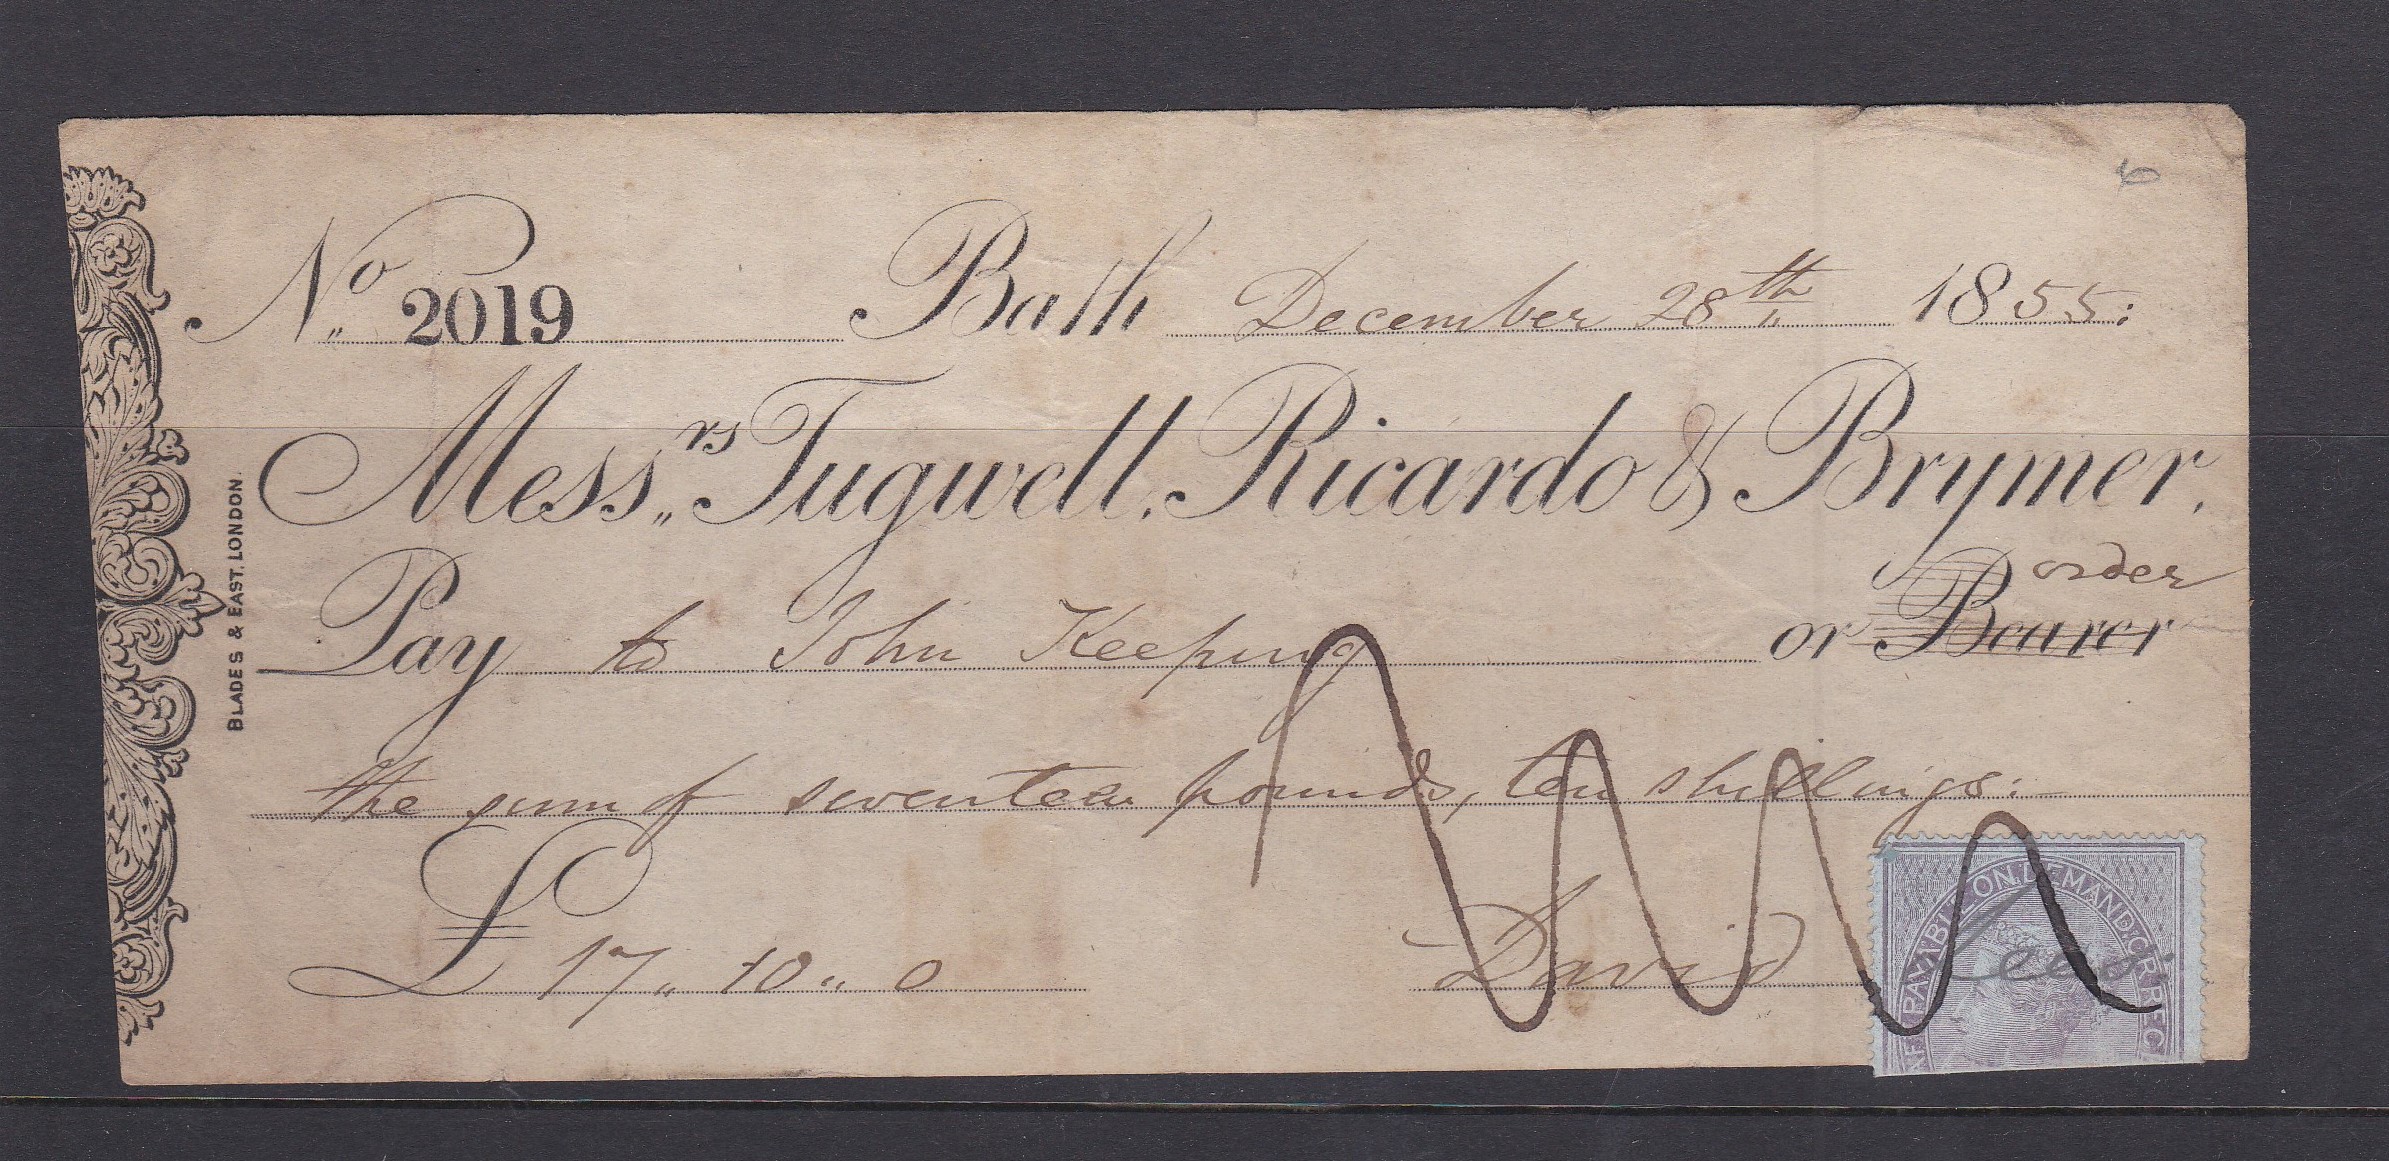 Tugwell Ricardo & Brymer, Bath-used bearer,vic.AD.black on cream, 28.12.1855-printer Blades & East